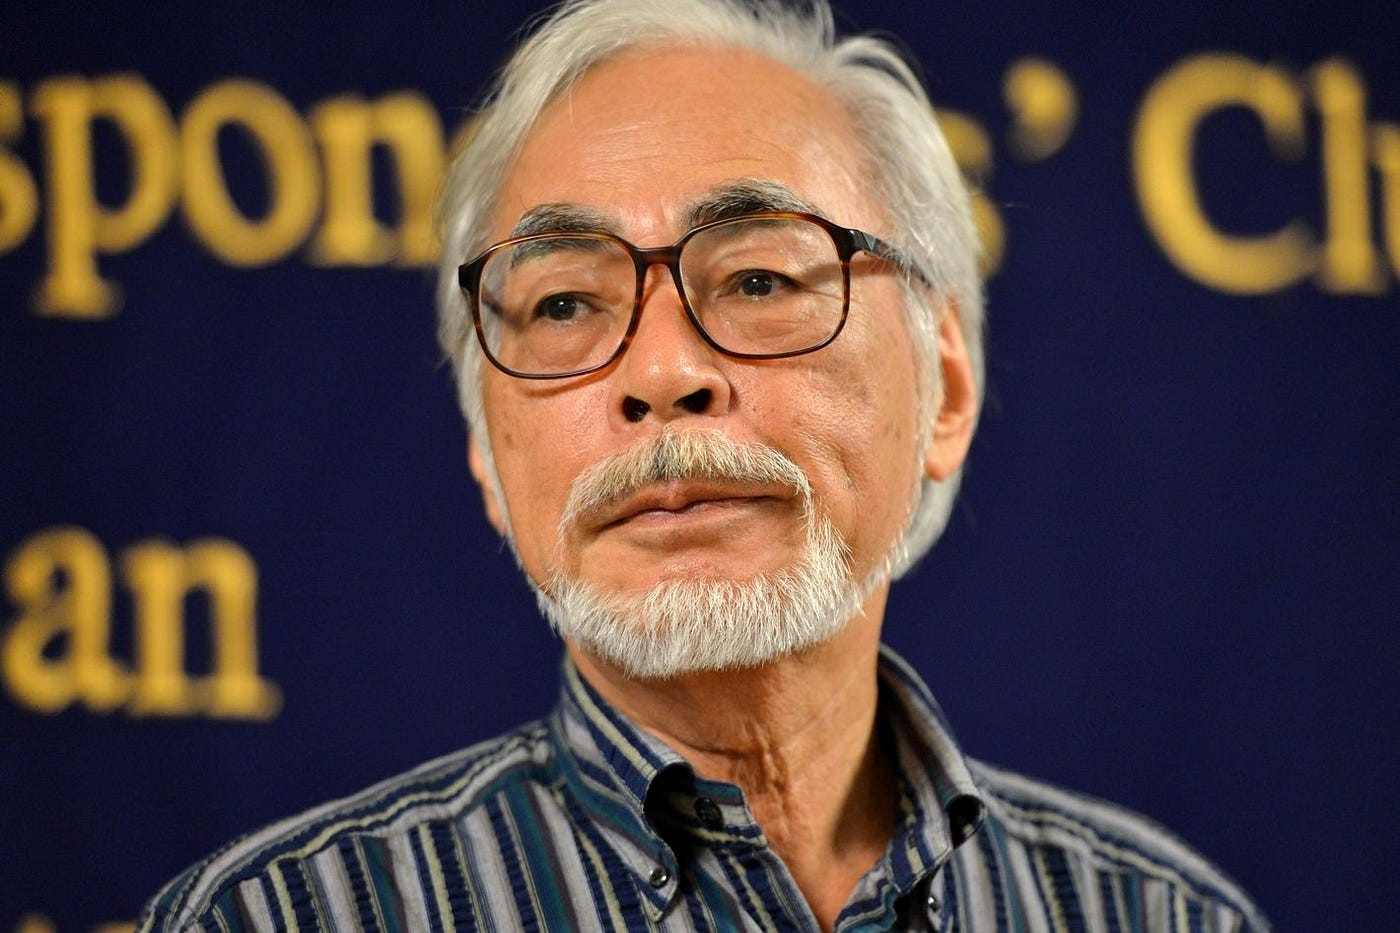 Director of Studio Ghibli Hayao Miyazaki